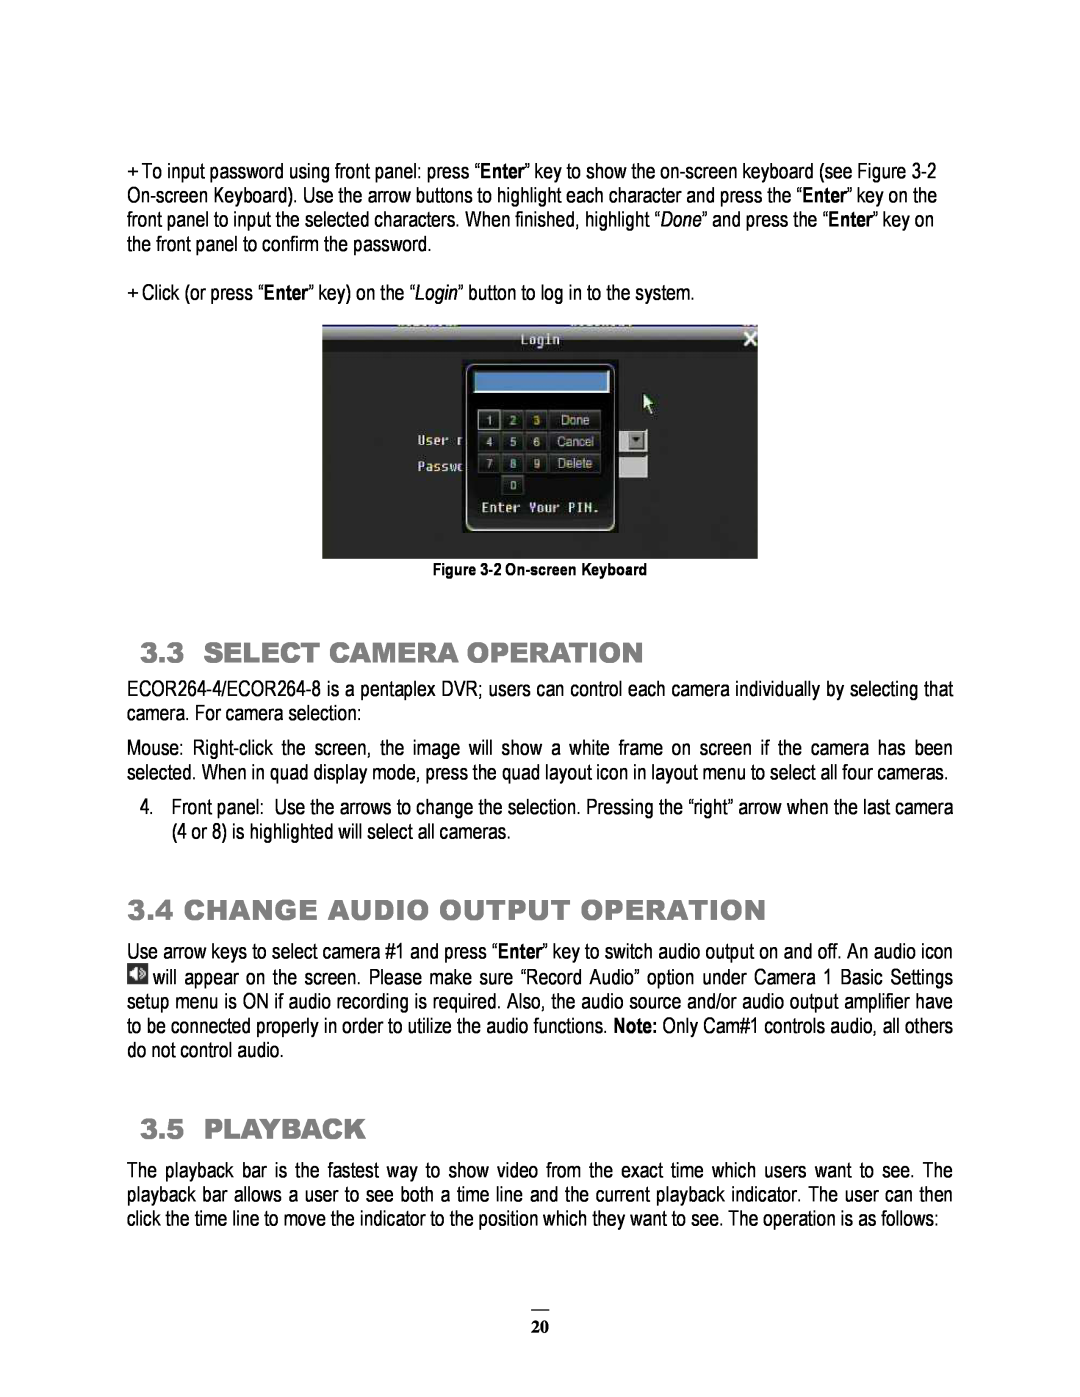 EverFocus ECOR264-8F1, ECOR264-8D1 Select Camera Operation, Change Audio Output Operation, Playback, 2 On-screen Keyboard 